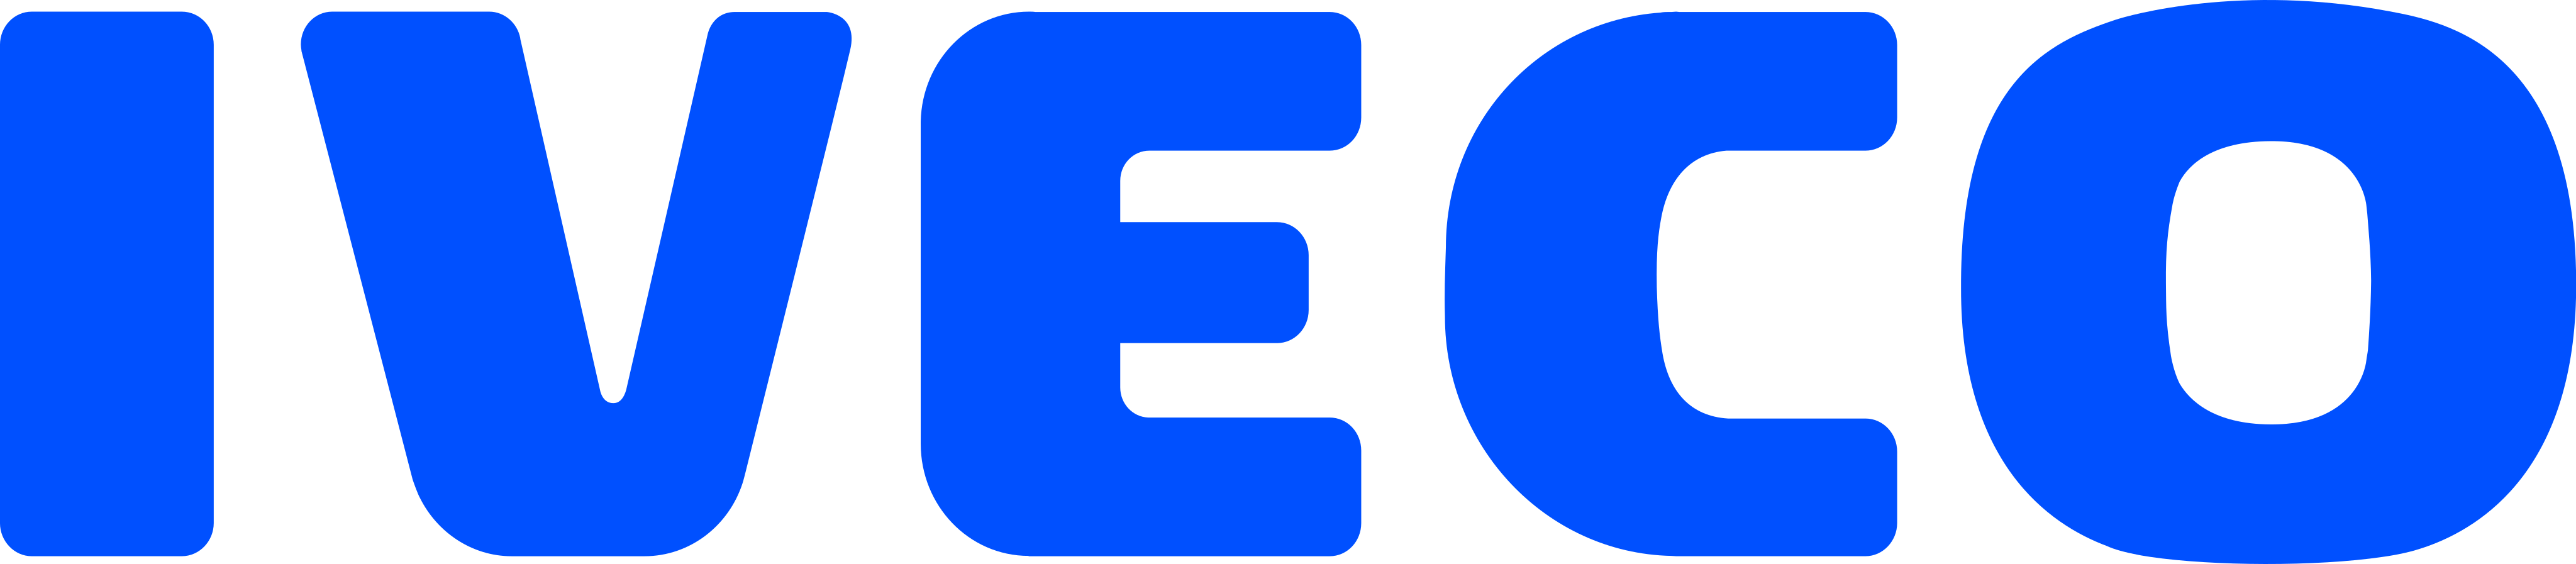 iveco logo 9 - Iveco Logo